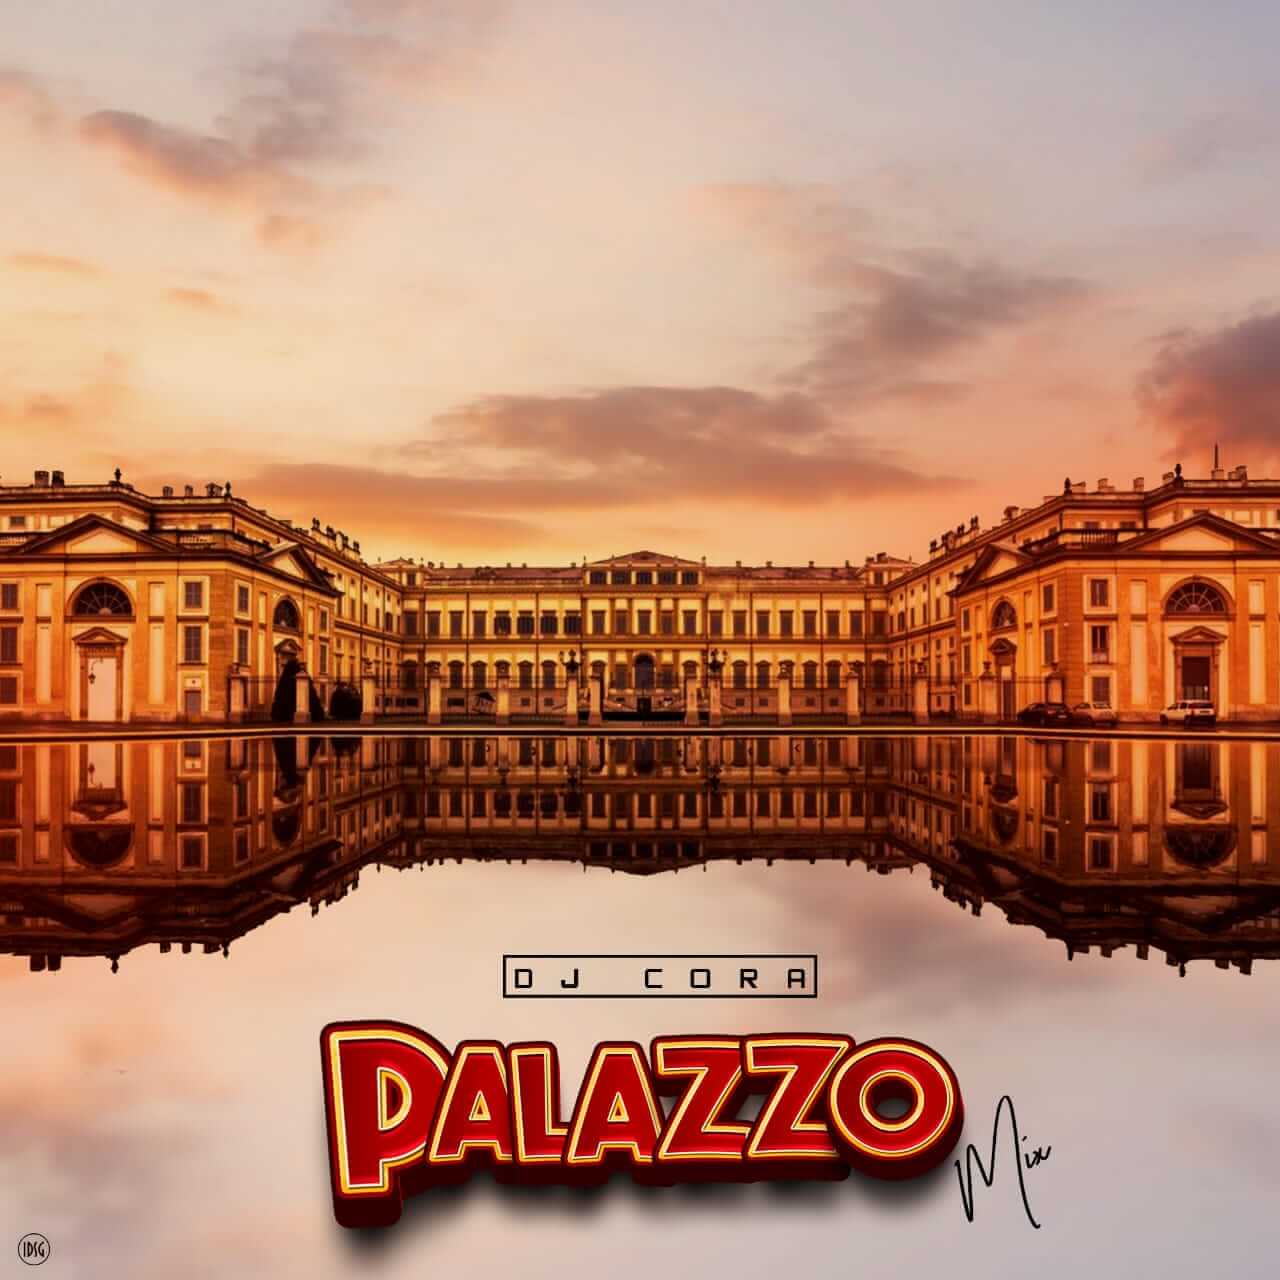 Dj Cora - Palazzo Mix